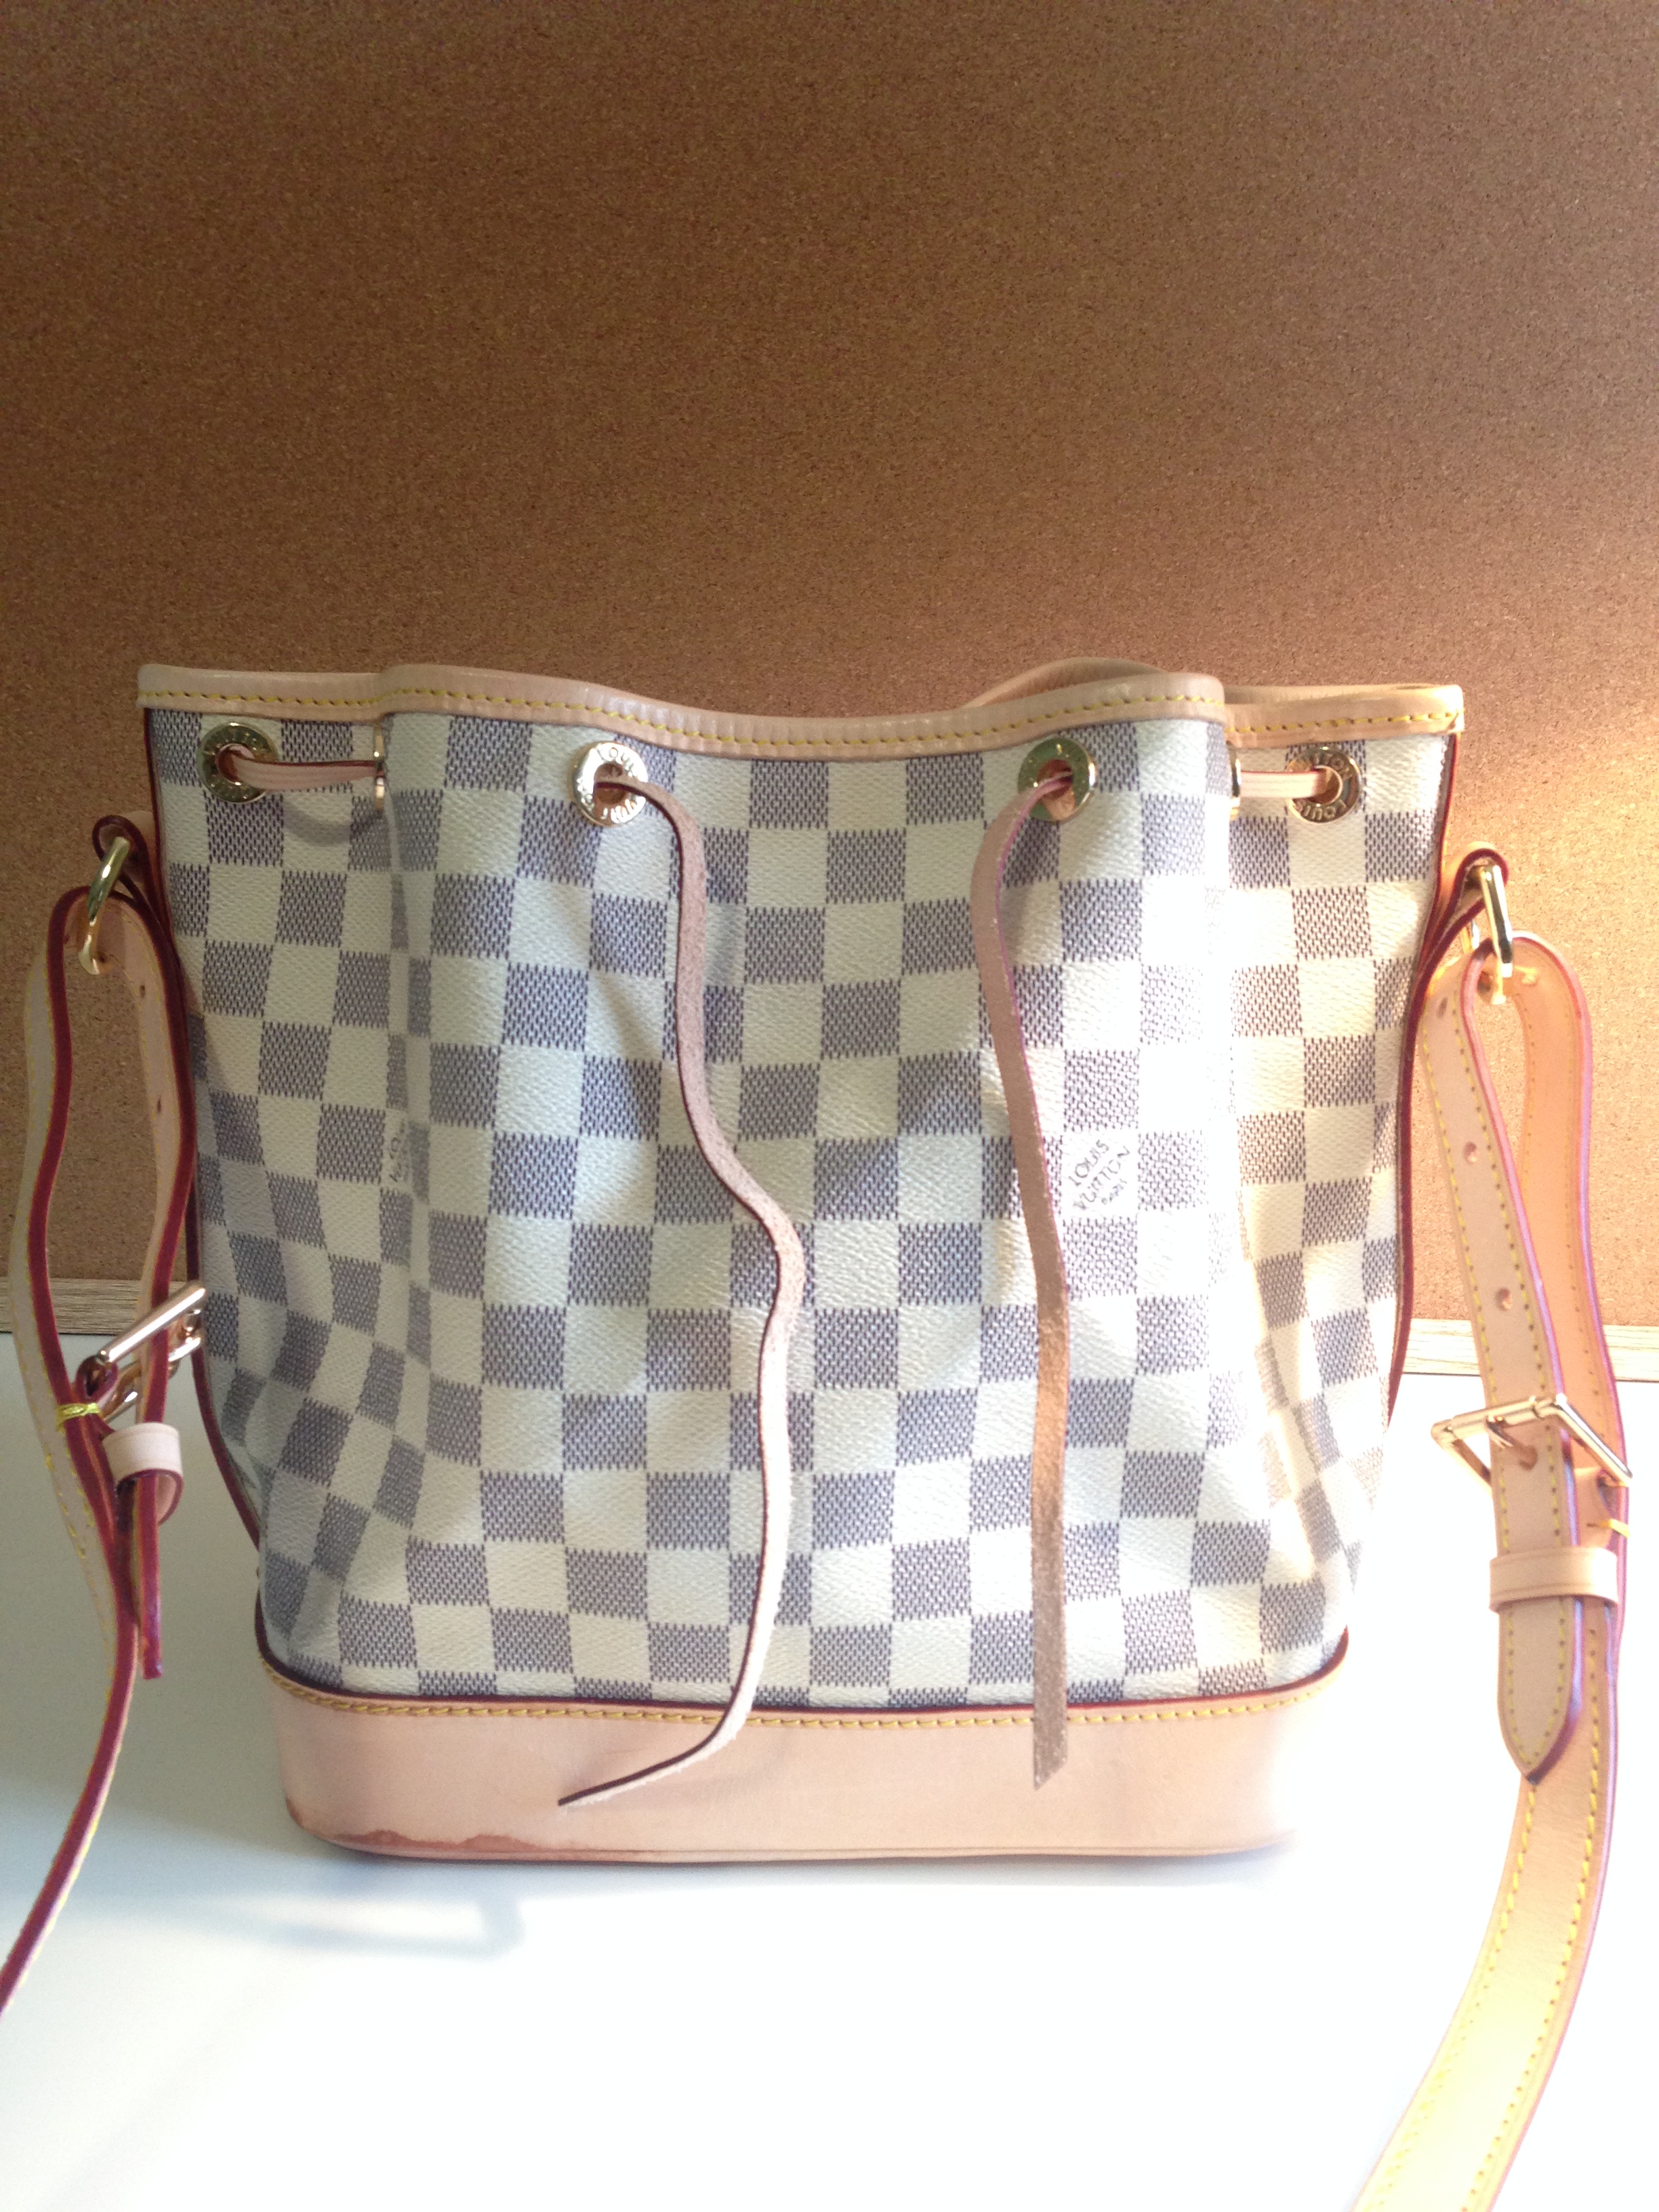 Louis Vuitton – Authentic & Replica Bags/Handbags Reviews by thepursequeen